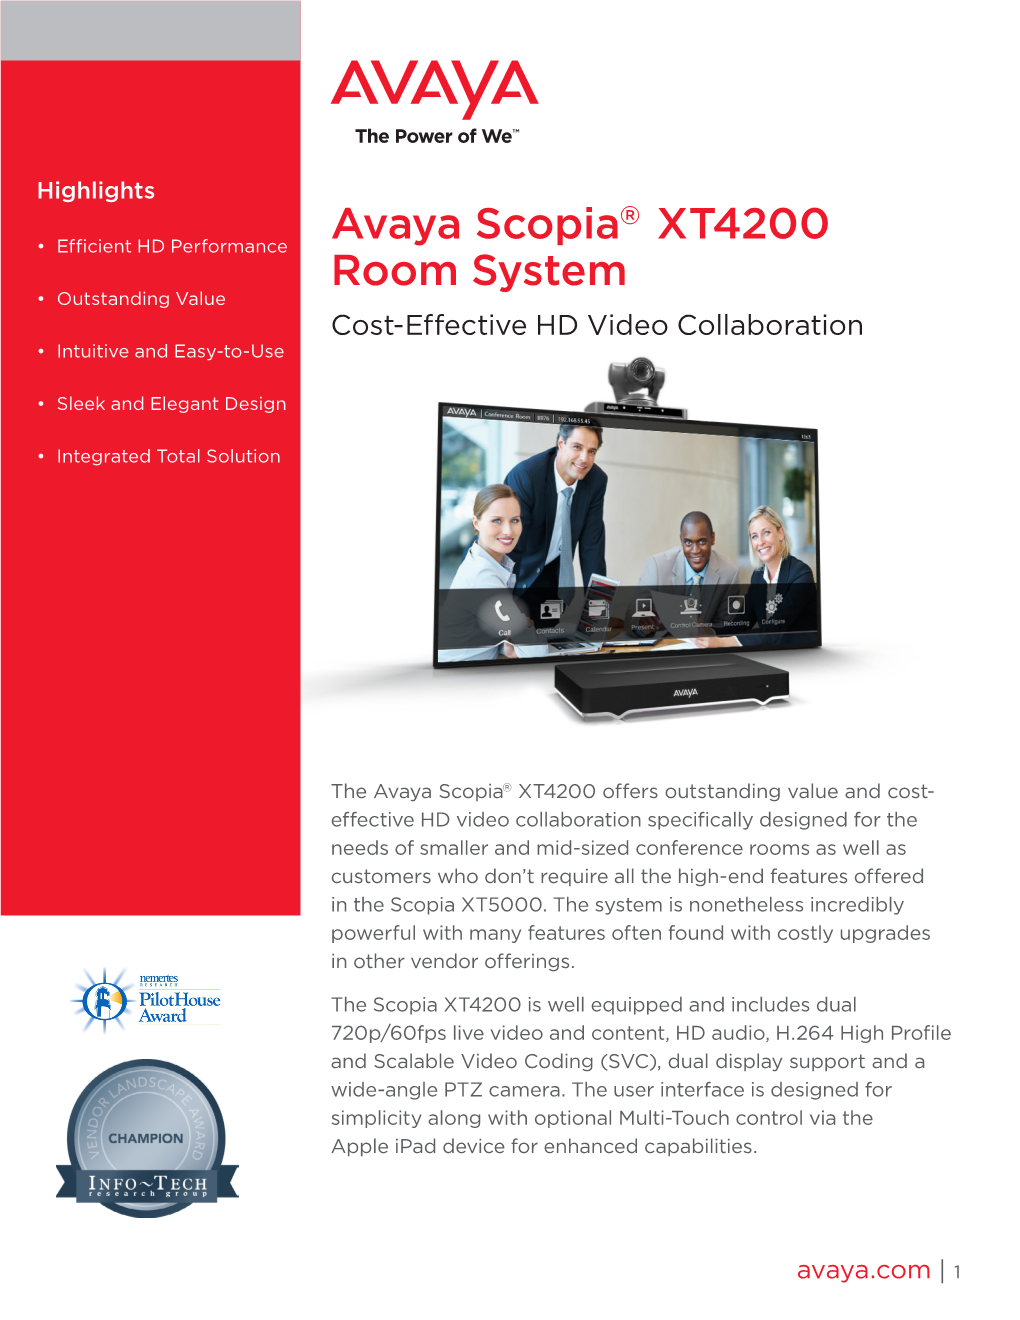 Avaya Scopia® XT4200 Room System Specs